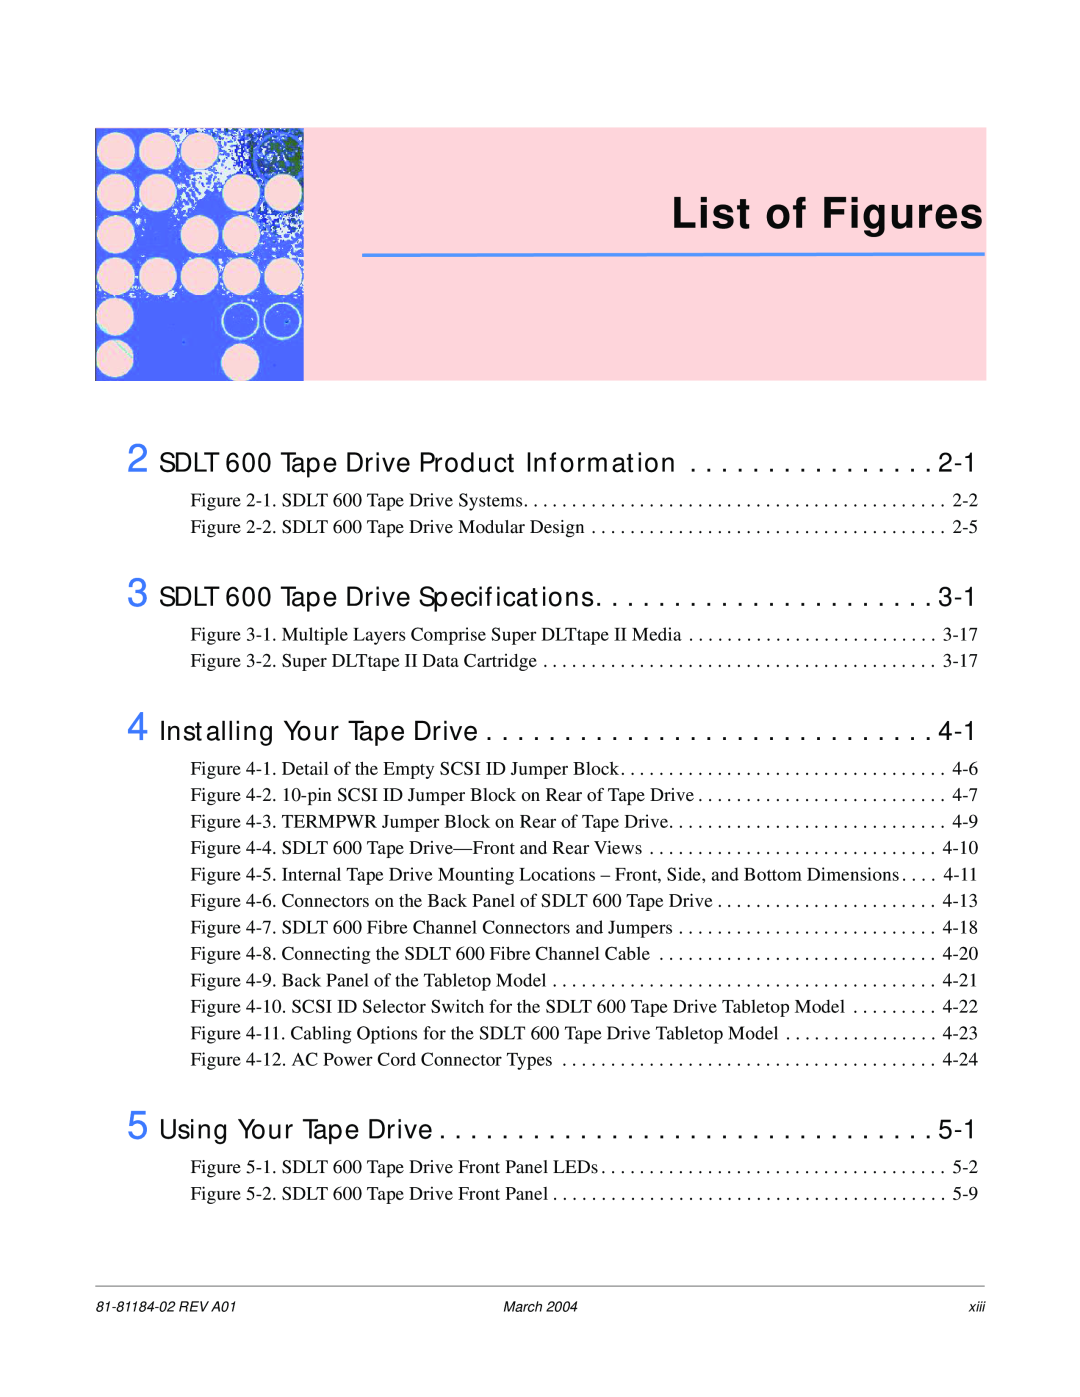 Tandberg Data manual List of Figures, SDLT 600 Tape Drive Product Information, SDLT 600 Tape Drive Specifications 